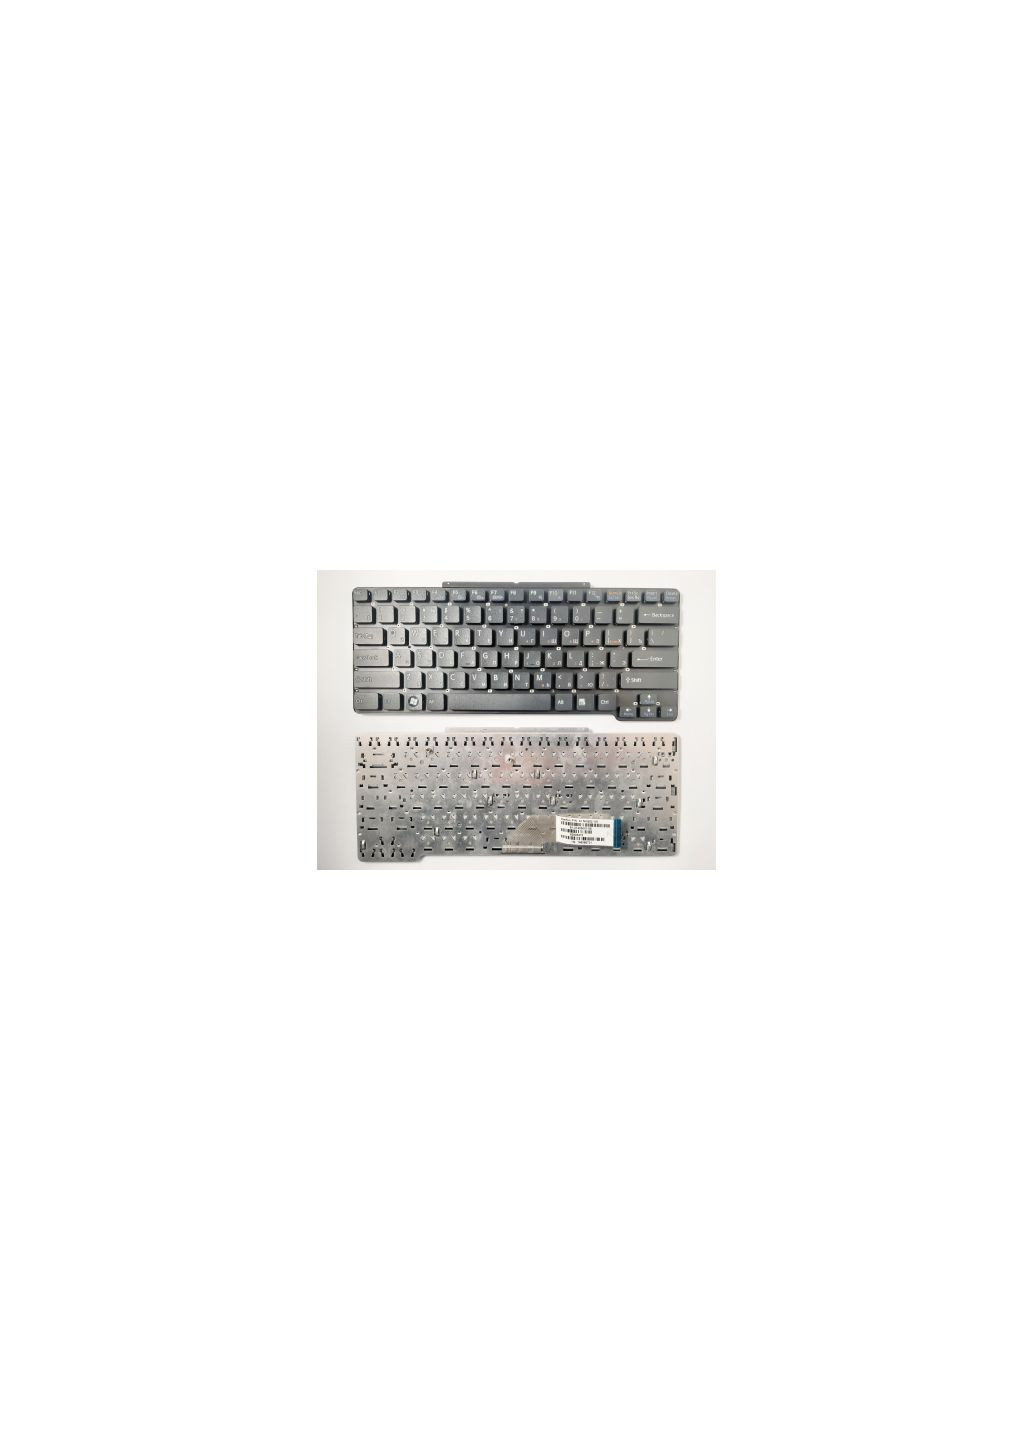 Клавиатура ноутбука VGNSR series черная без рамки UA (A43212) Sony vgn-sr series черная без рамки ua (276706394)